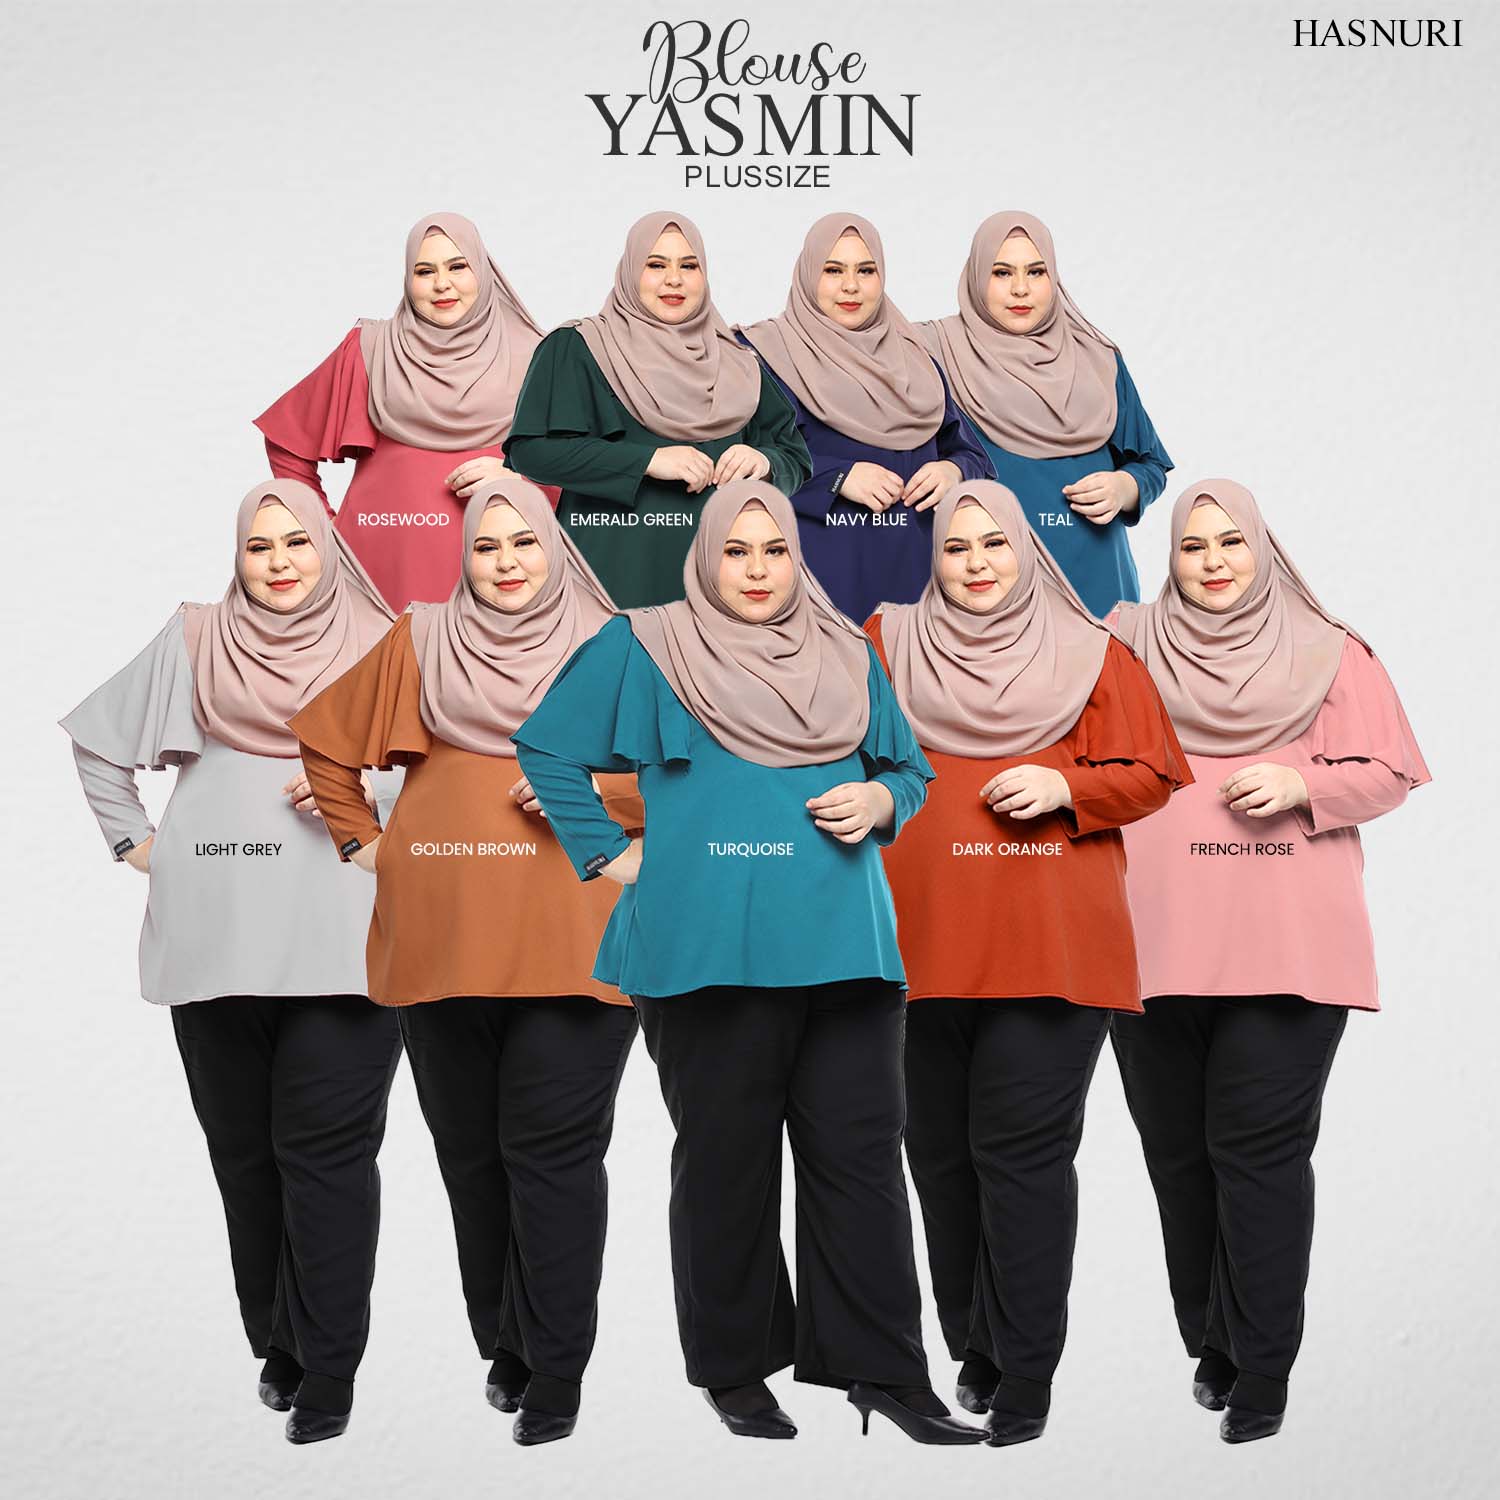 Blouse Yasmin Plus Size - Light Grey